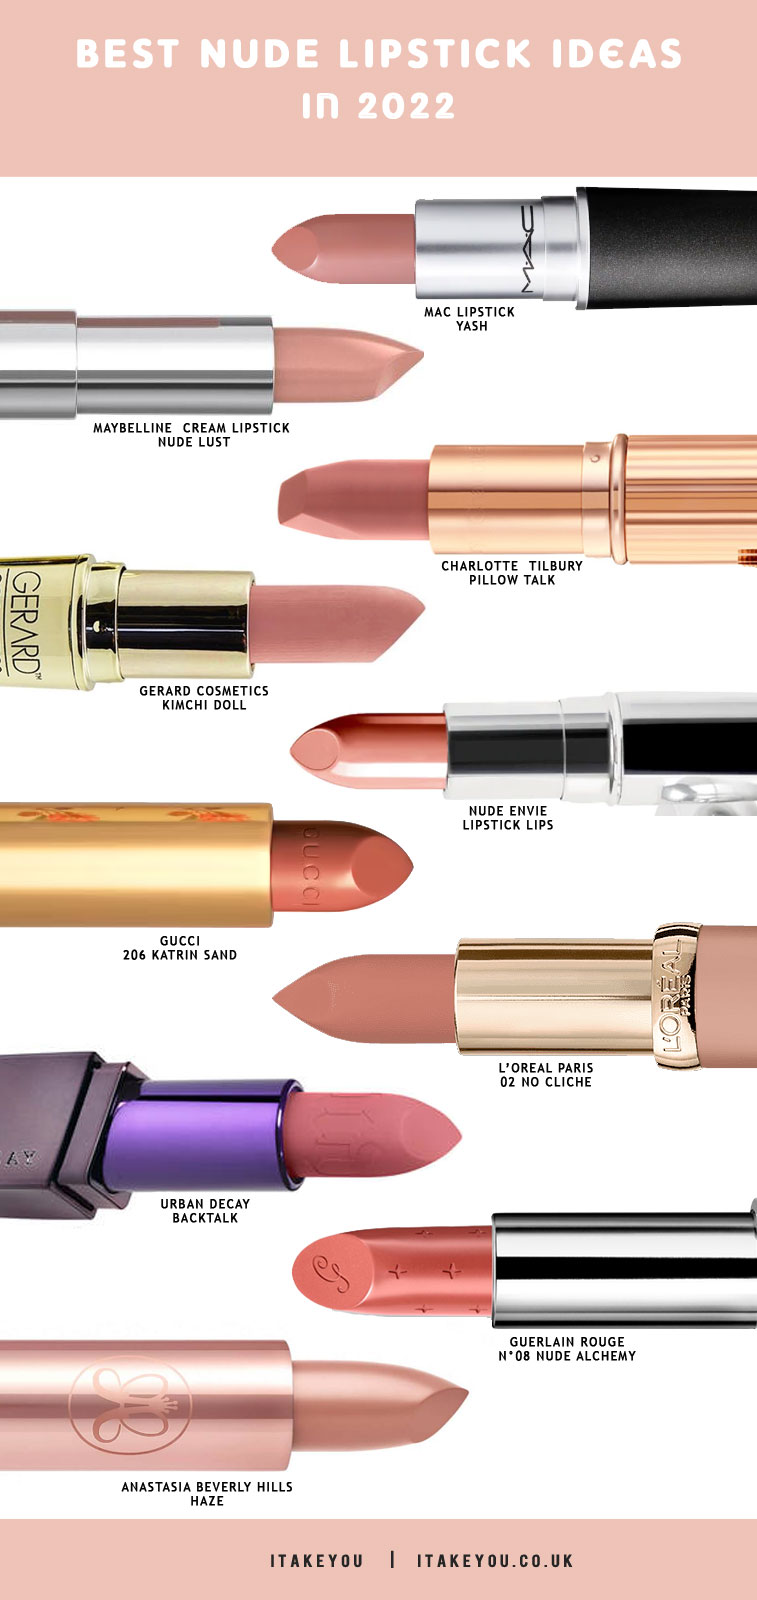 10 The Best Nude Lipsticks in 2022